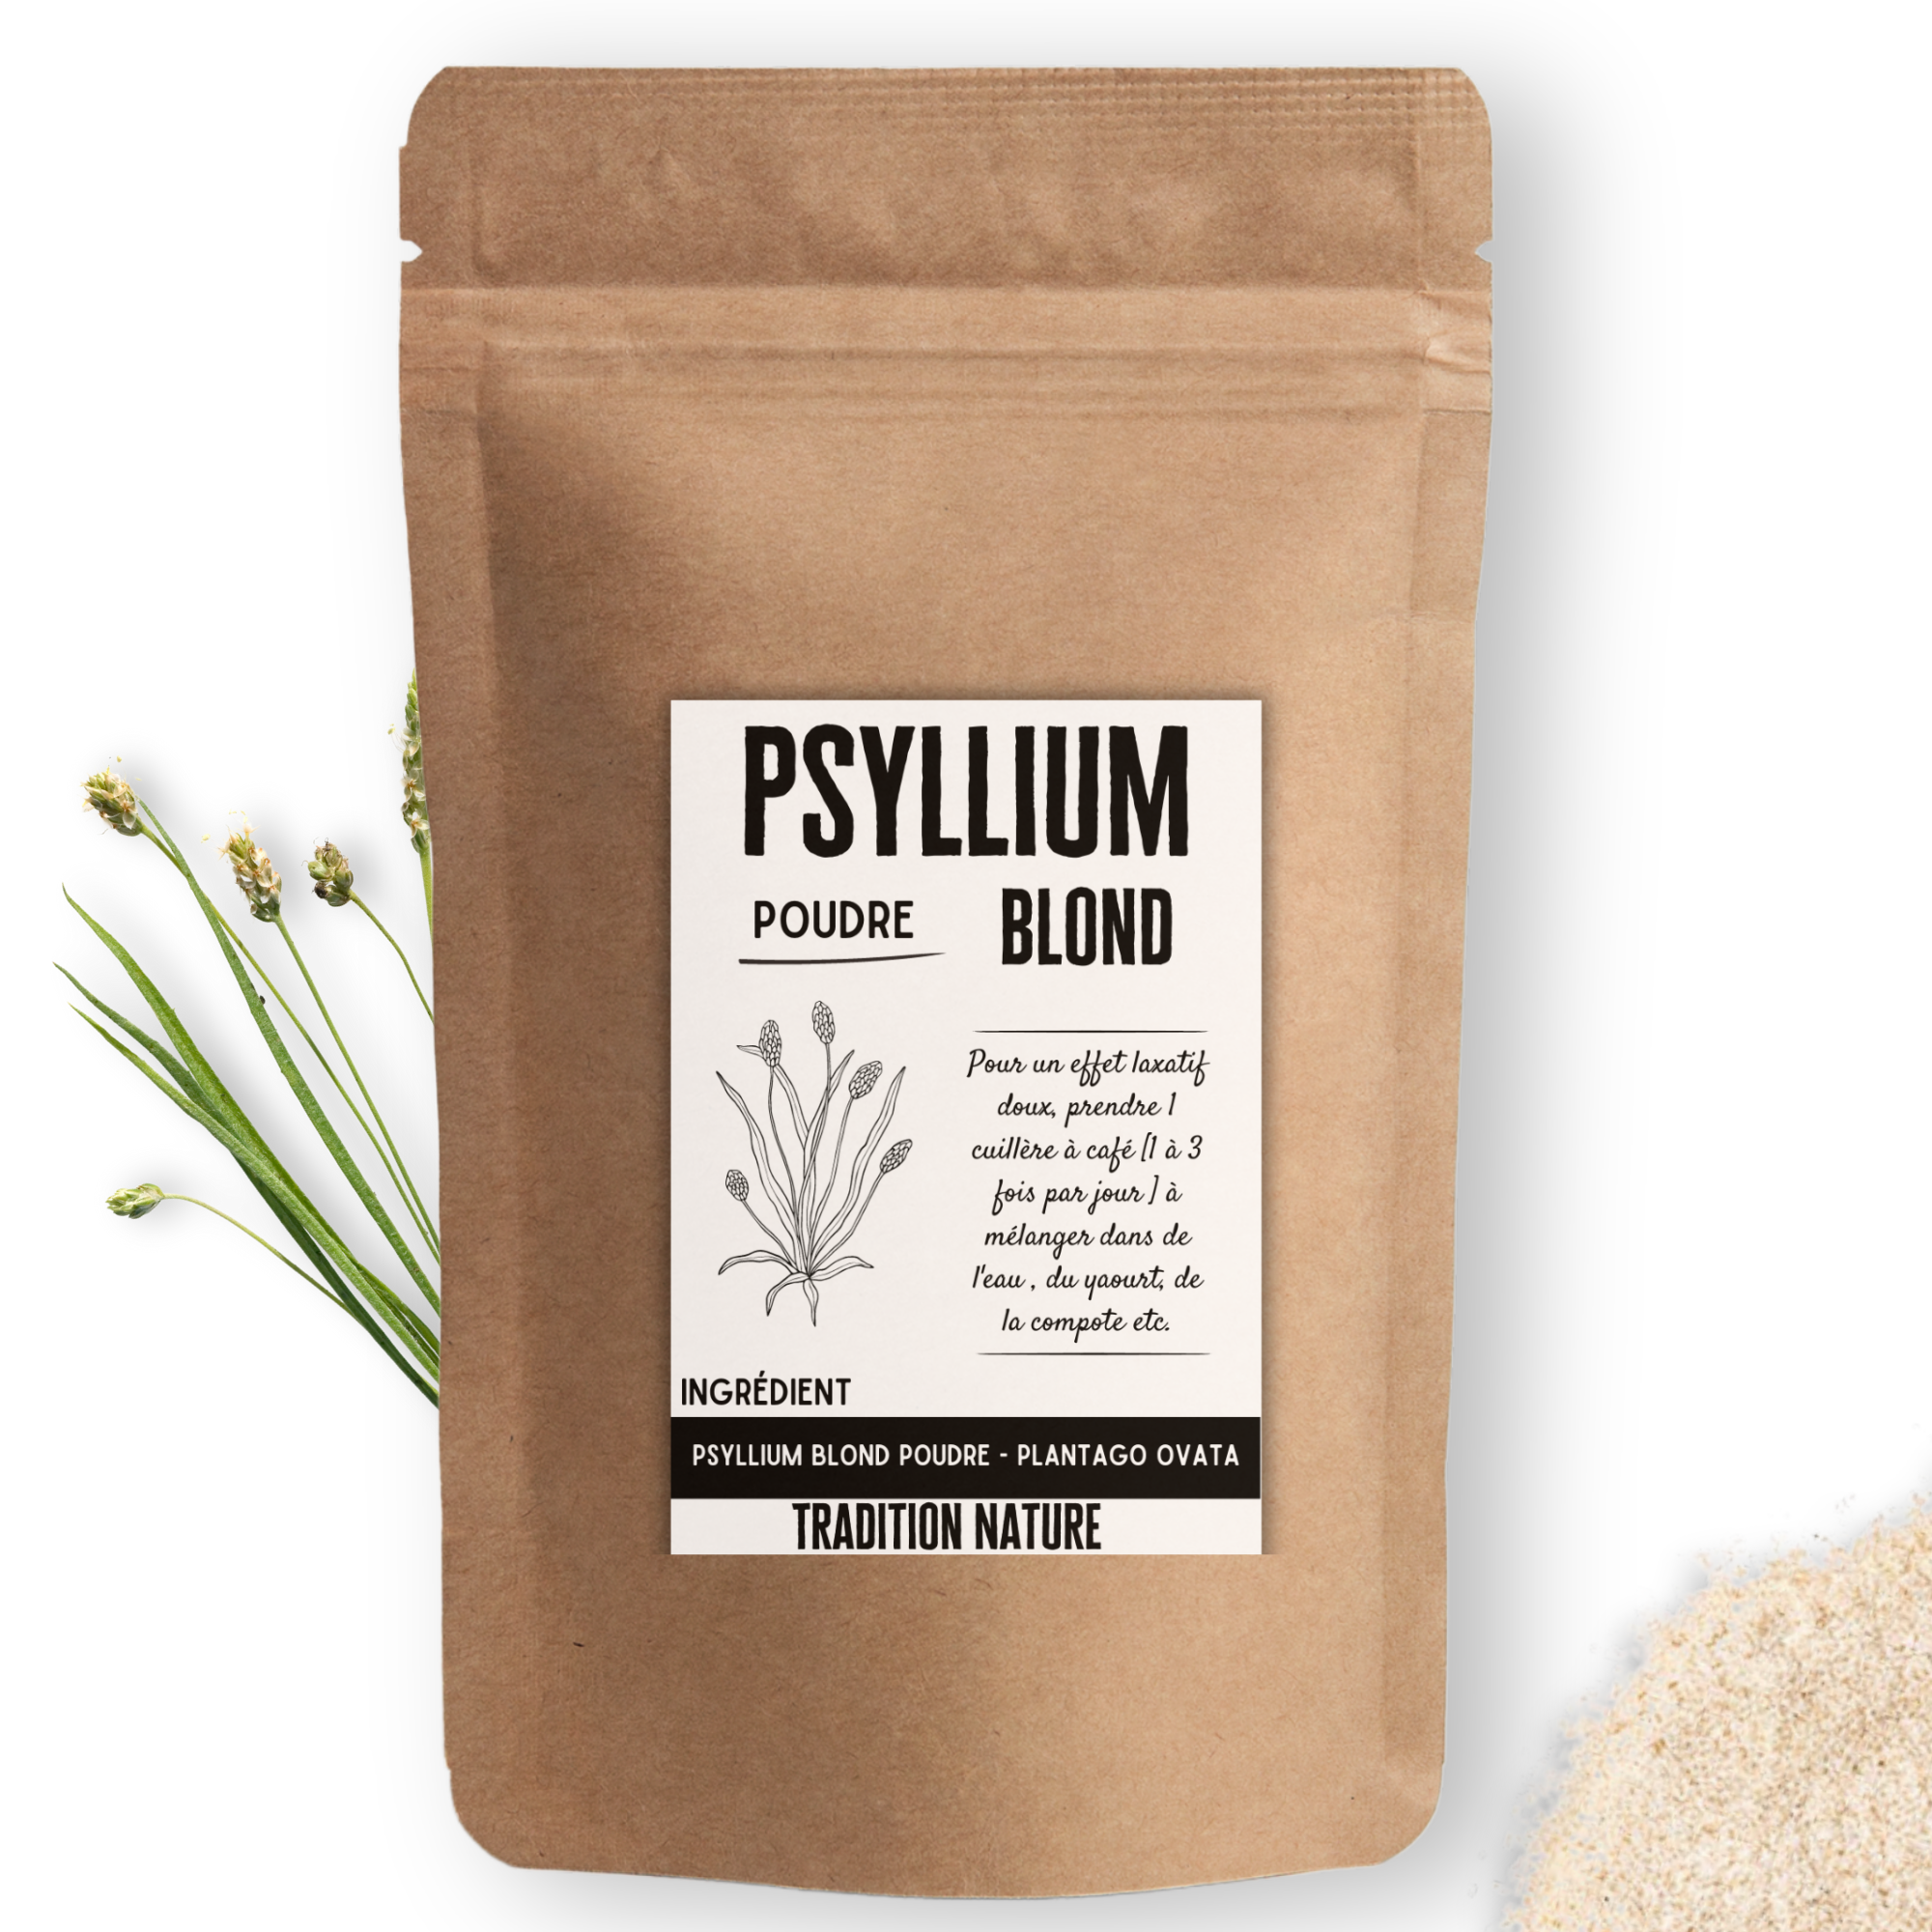 Psyllium blond - Plantago ovata - poudre extra fine